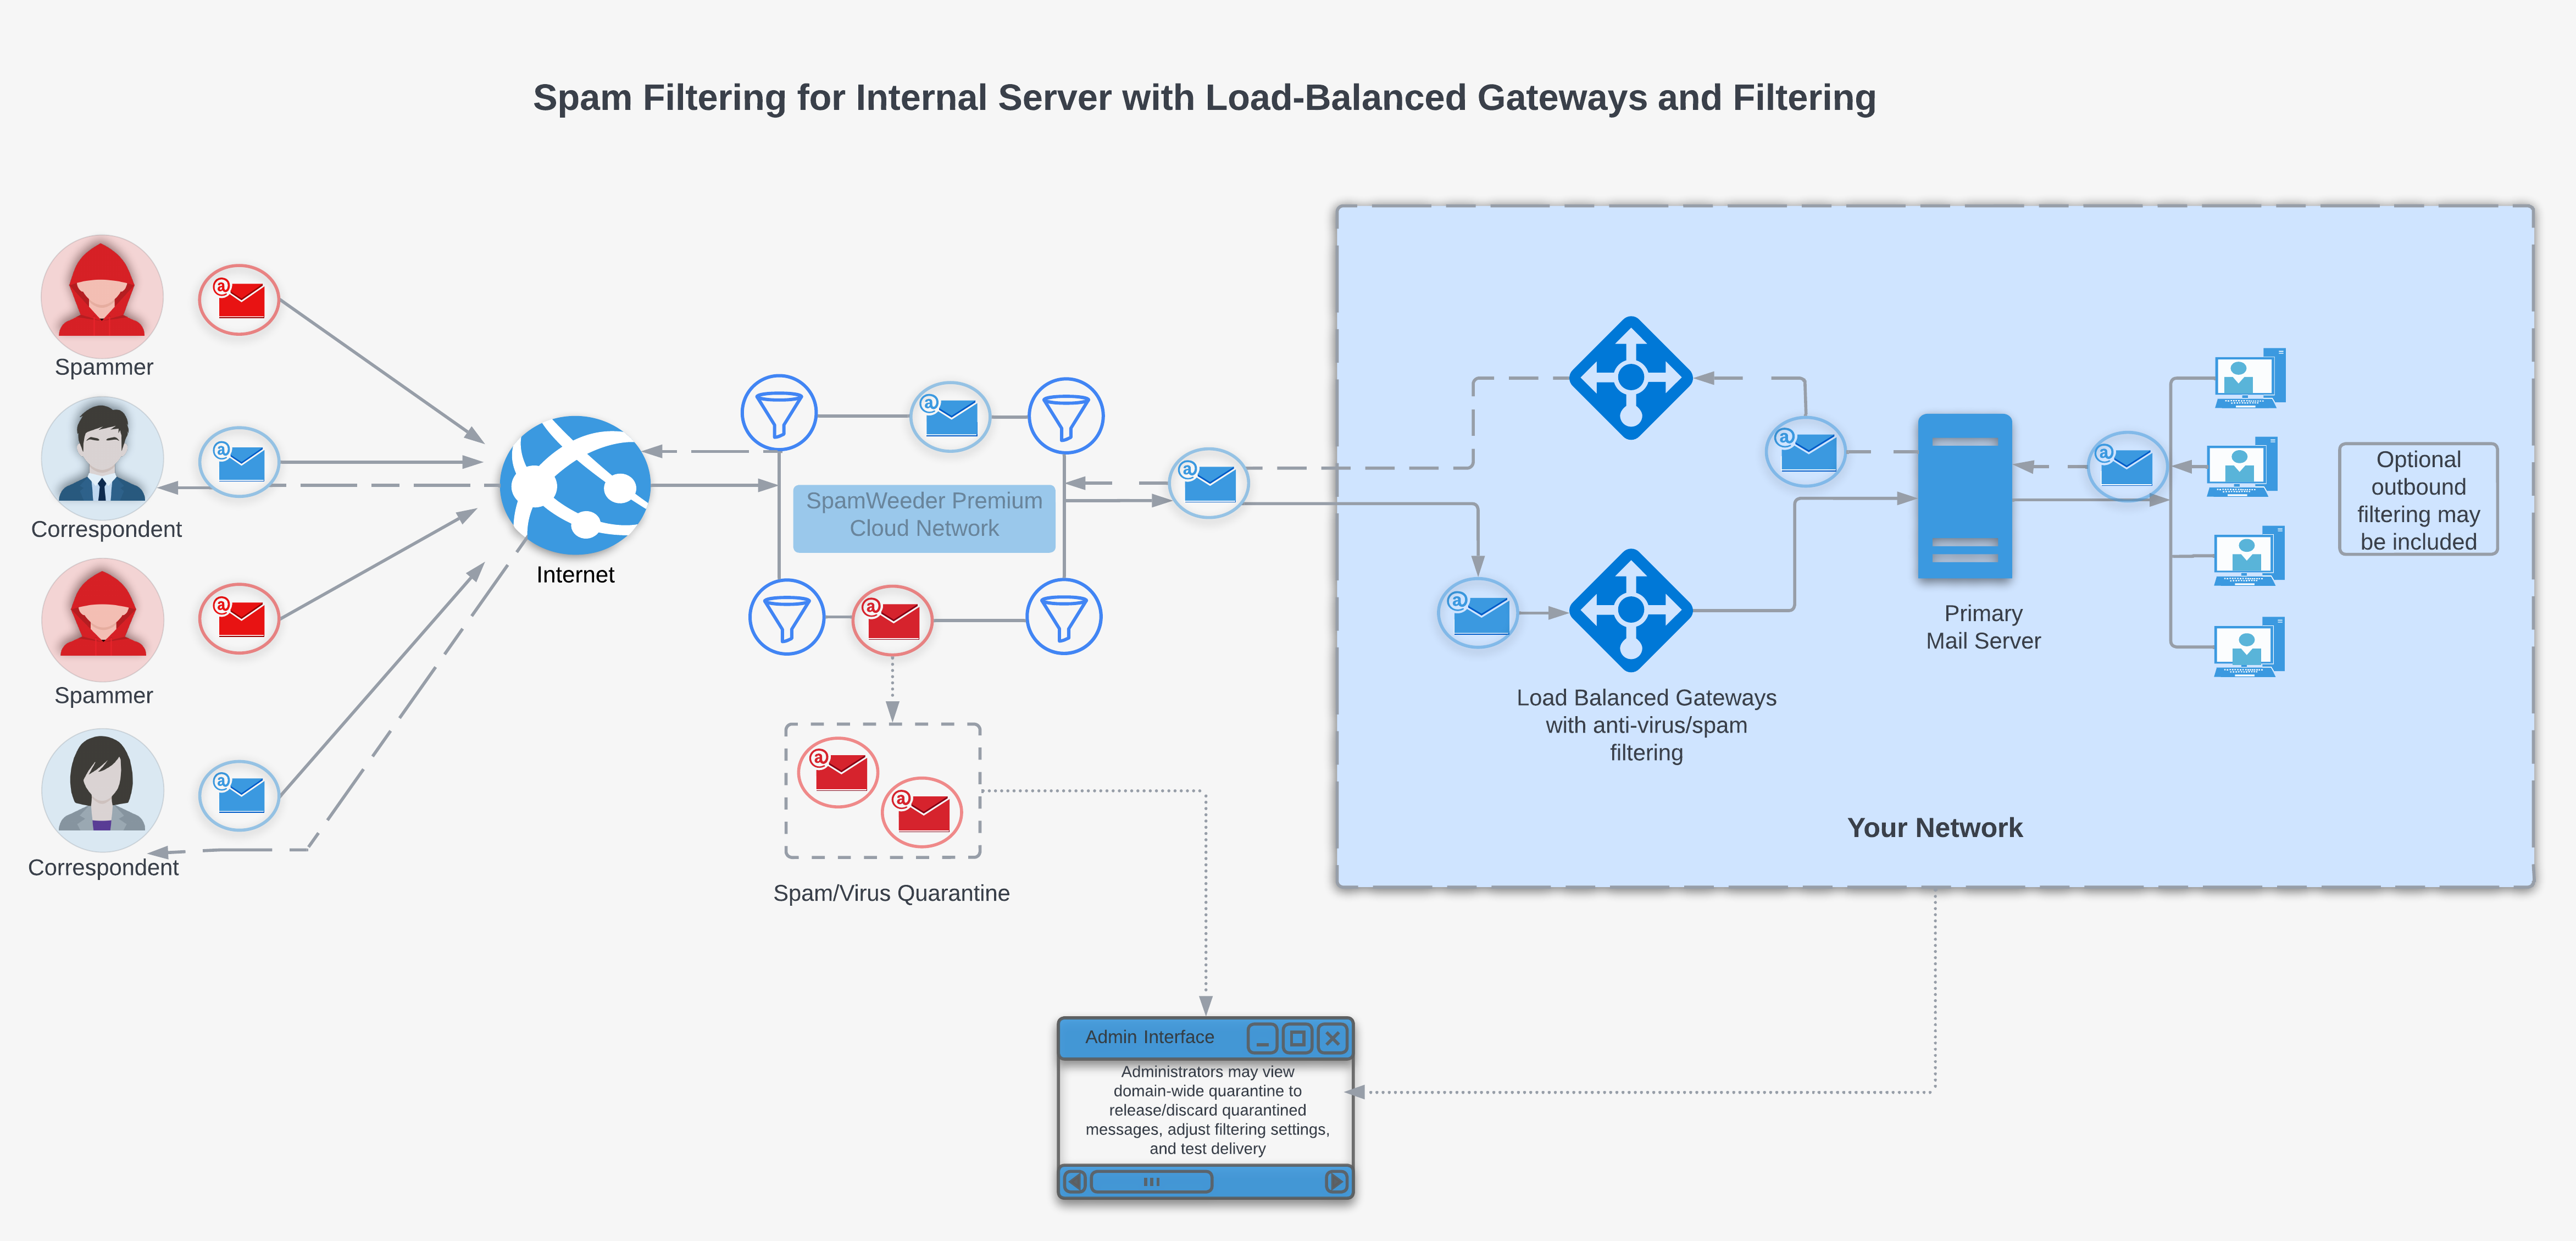 SpamWeeder Premium Solution for Internal Mail Servers with Multiple Internal Spam Filtering Gateways